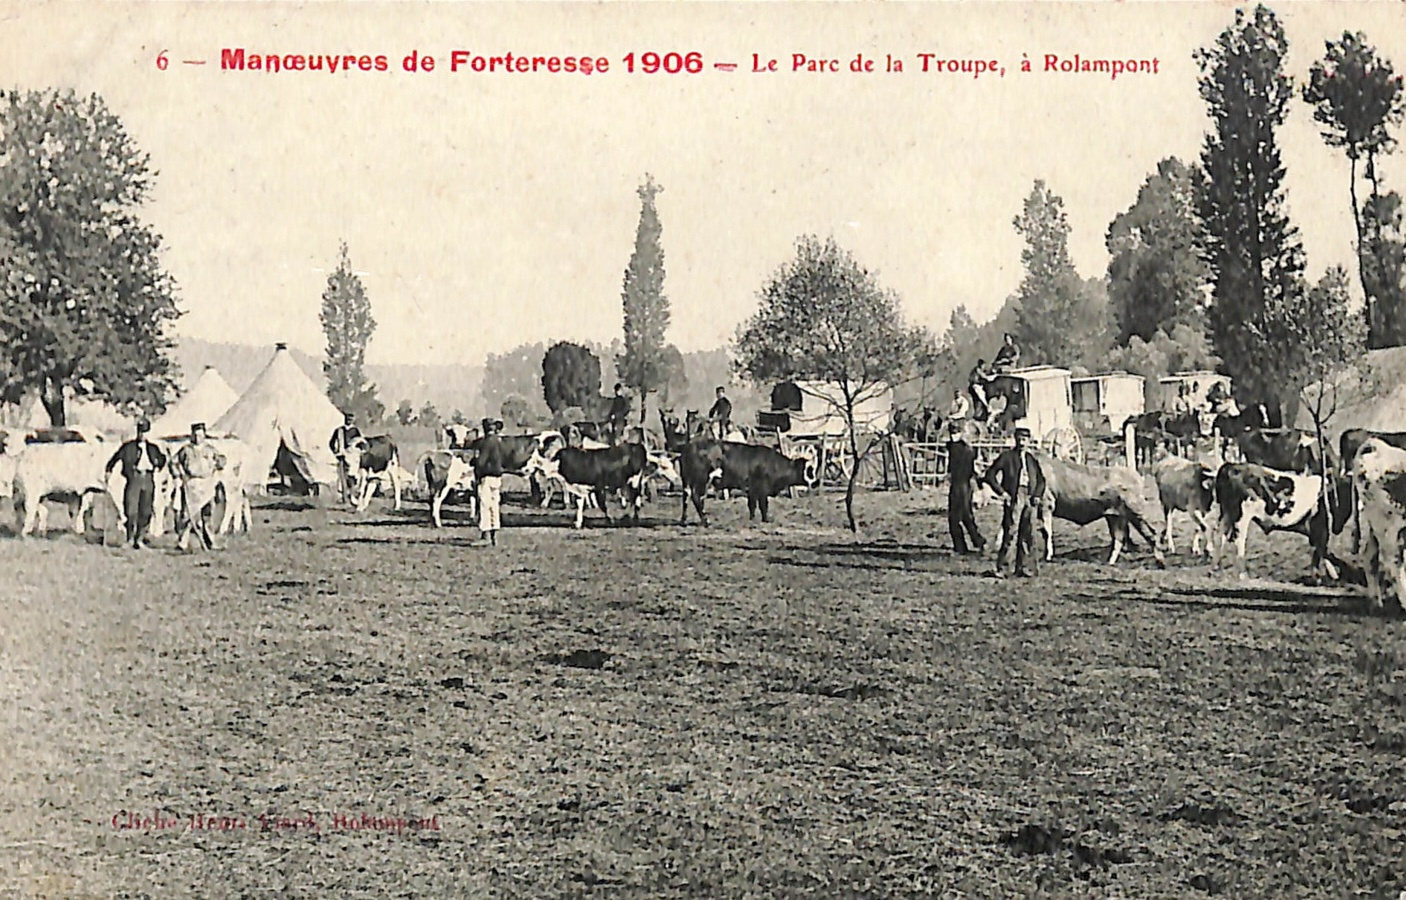 Le champ de manoeuvre en 1906